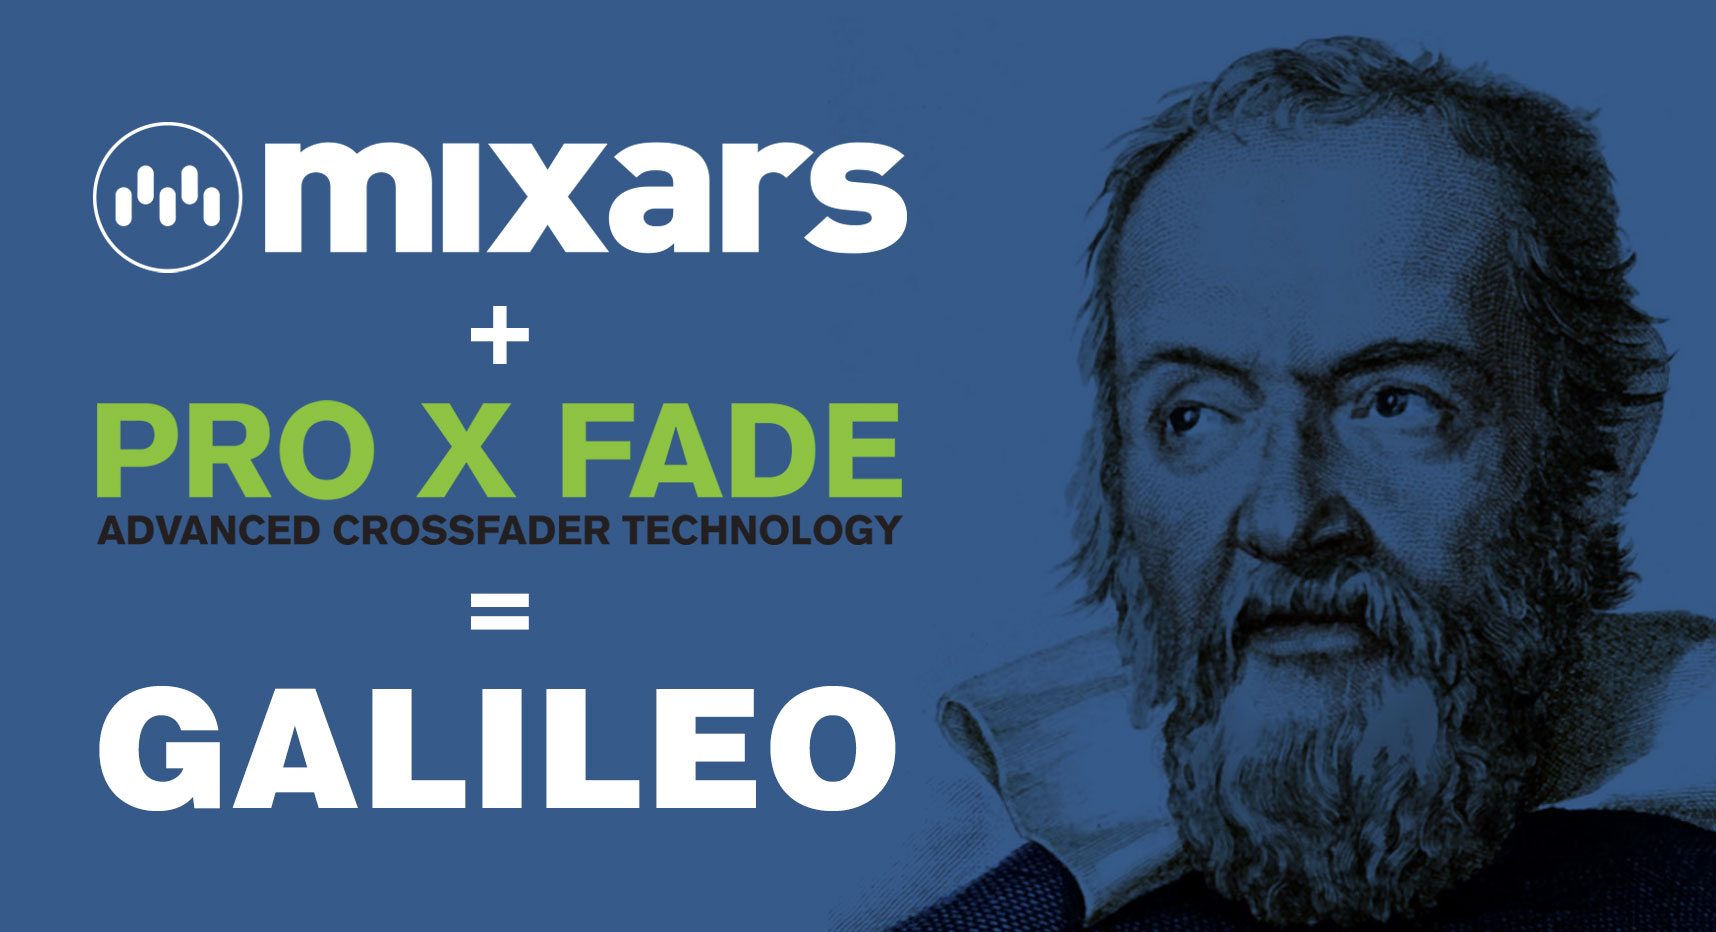 Mixars Pro x Fade Galileo crossfader fader